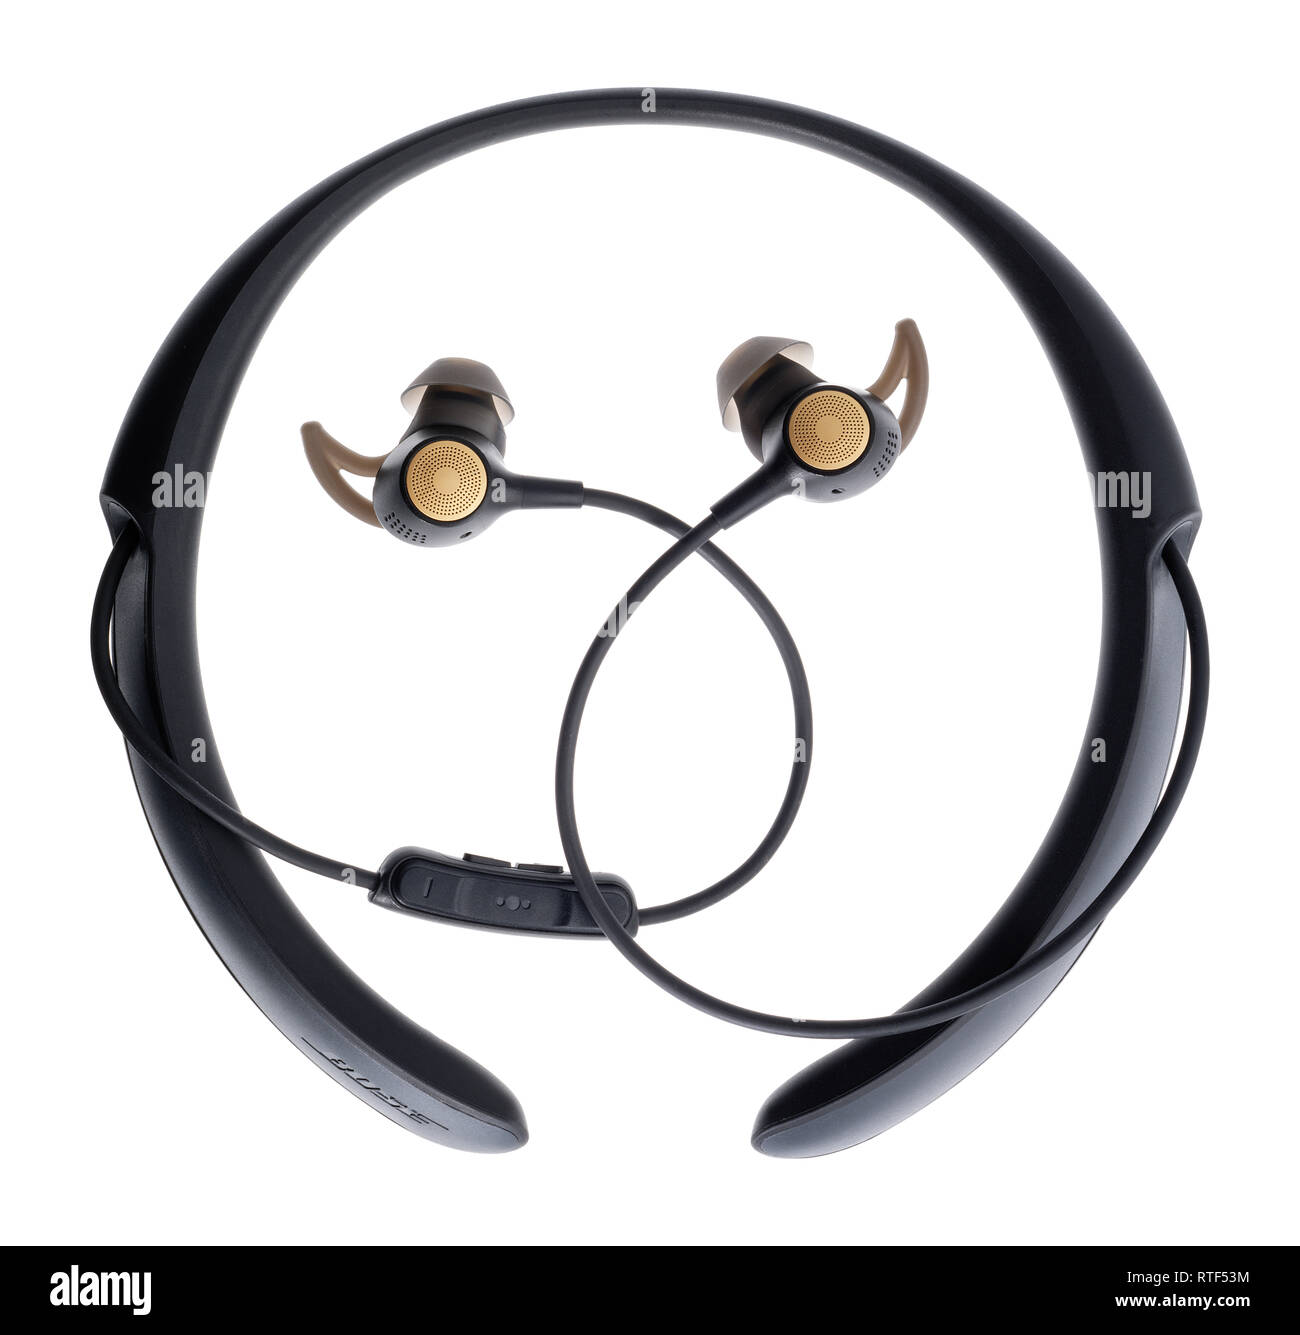 Bose hearphones. Help for hearing better. Device that enhances conversation. Stock Photo